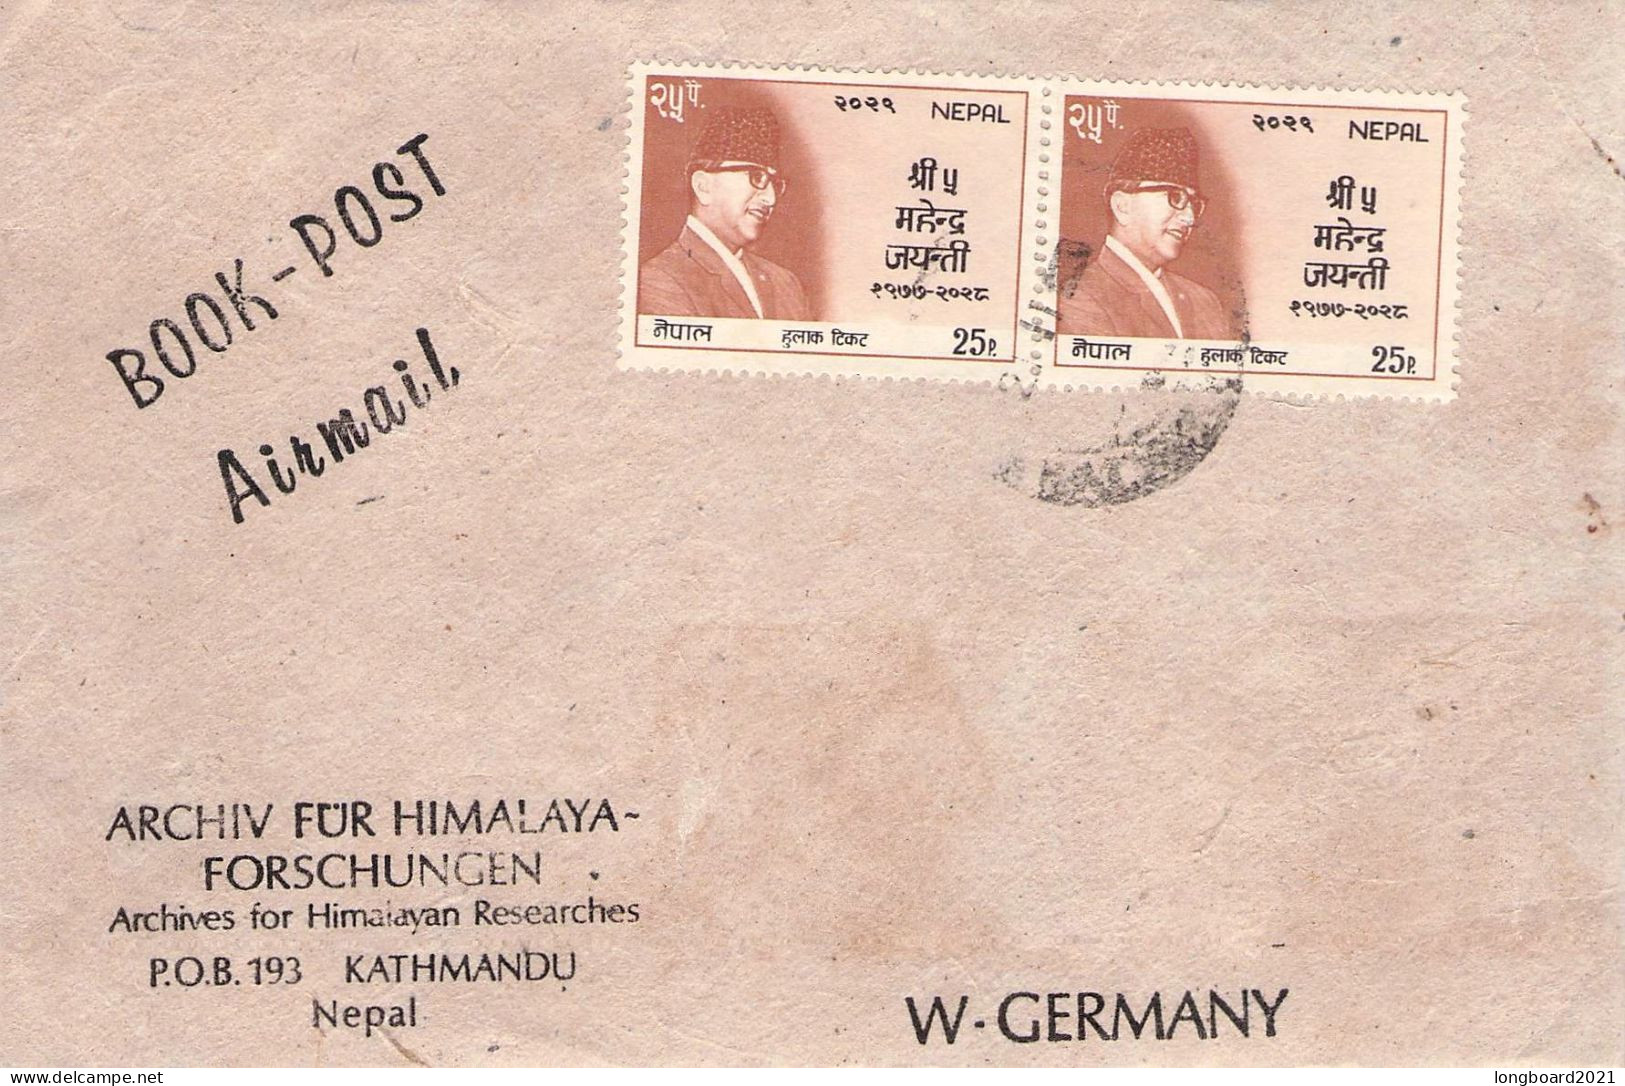 NEPAL - BOOK POST AIRMAIL - GERMANY / 7024 - Nepal